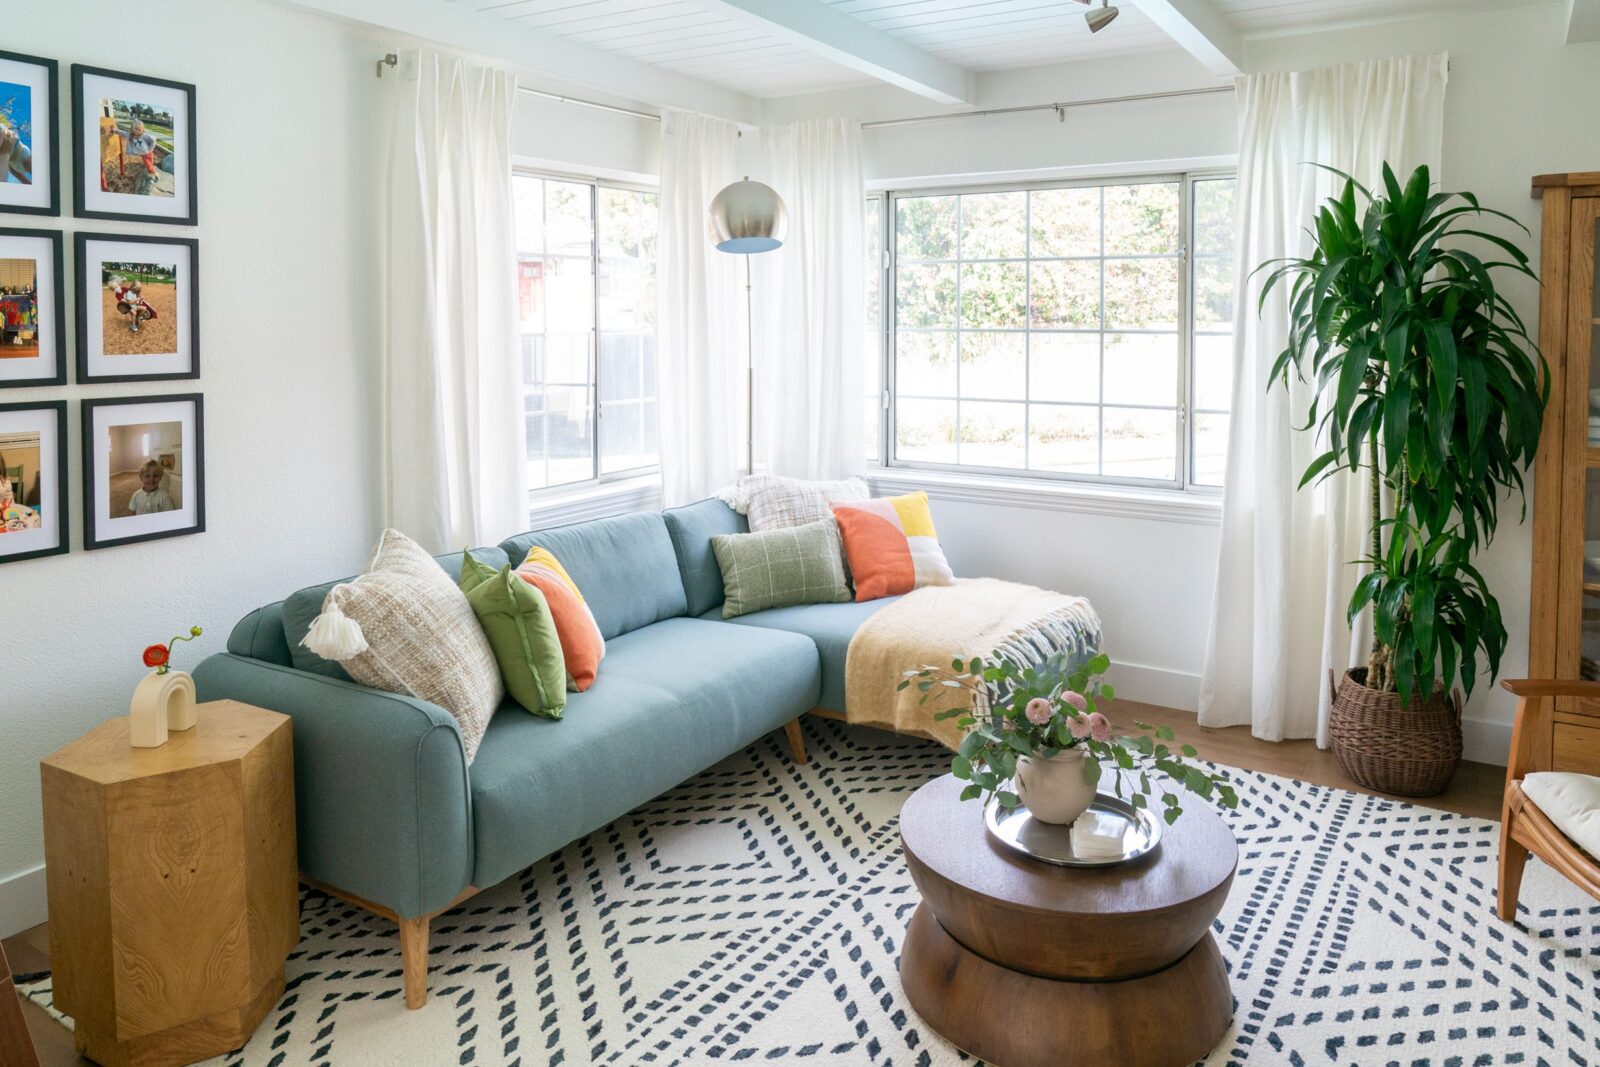 9 Best Living Room Decorating Ideas